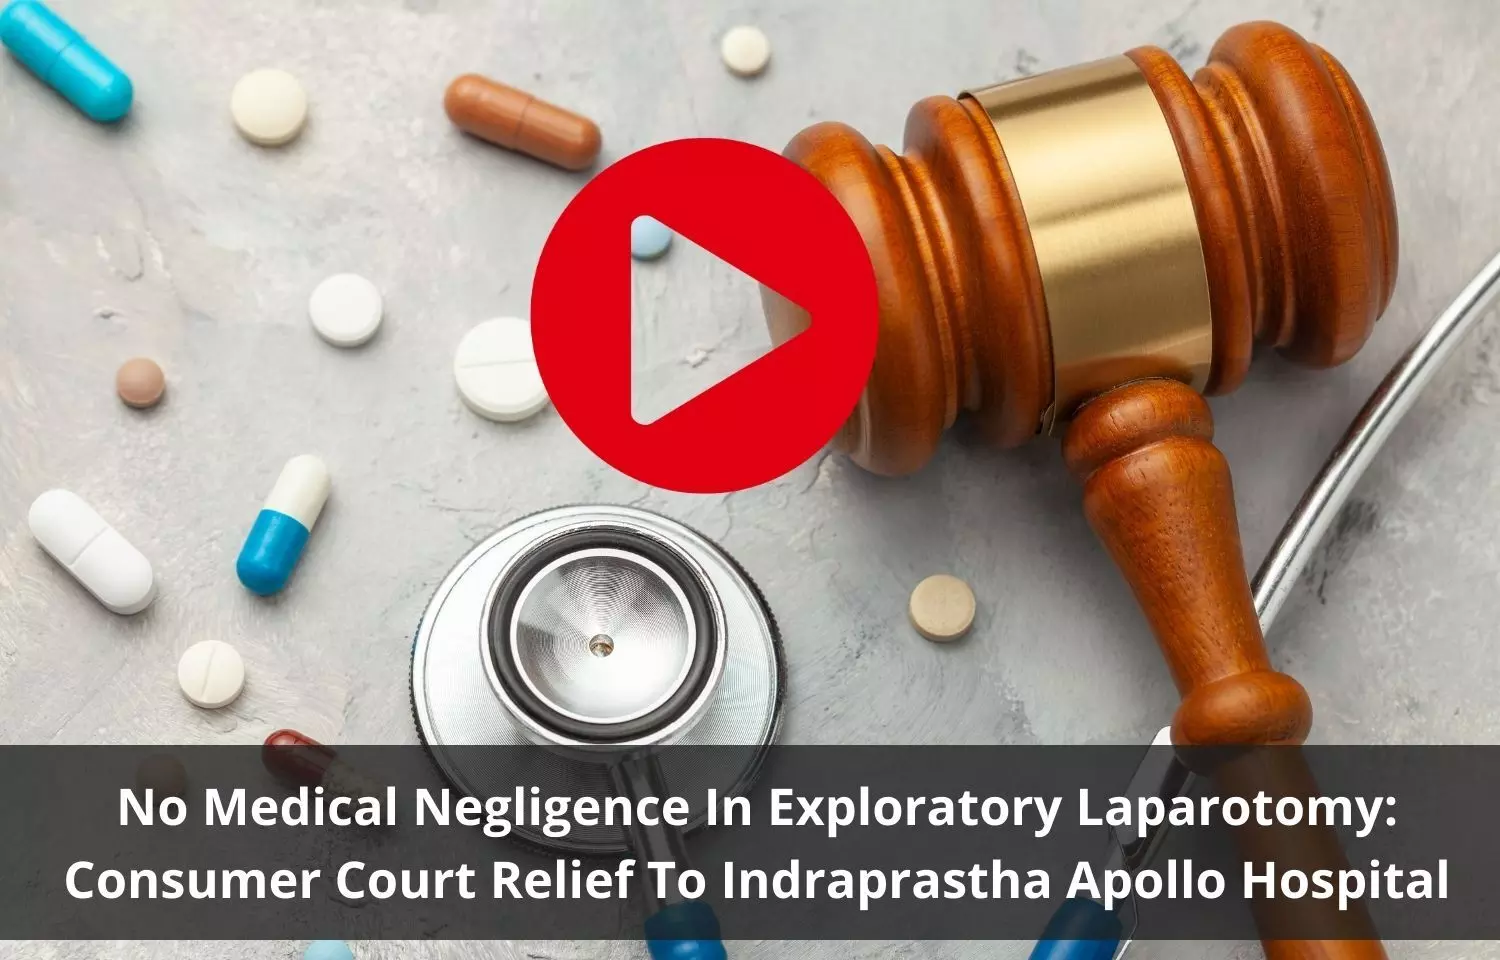 No medical negligence in Exploratory Laparotomy: Consumer Court relief to Indraprastha Apollo Hospital